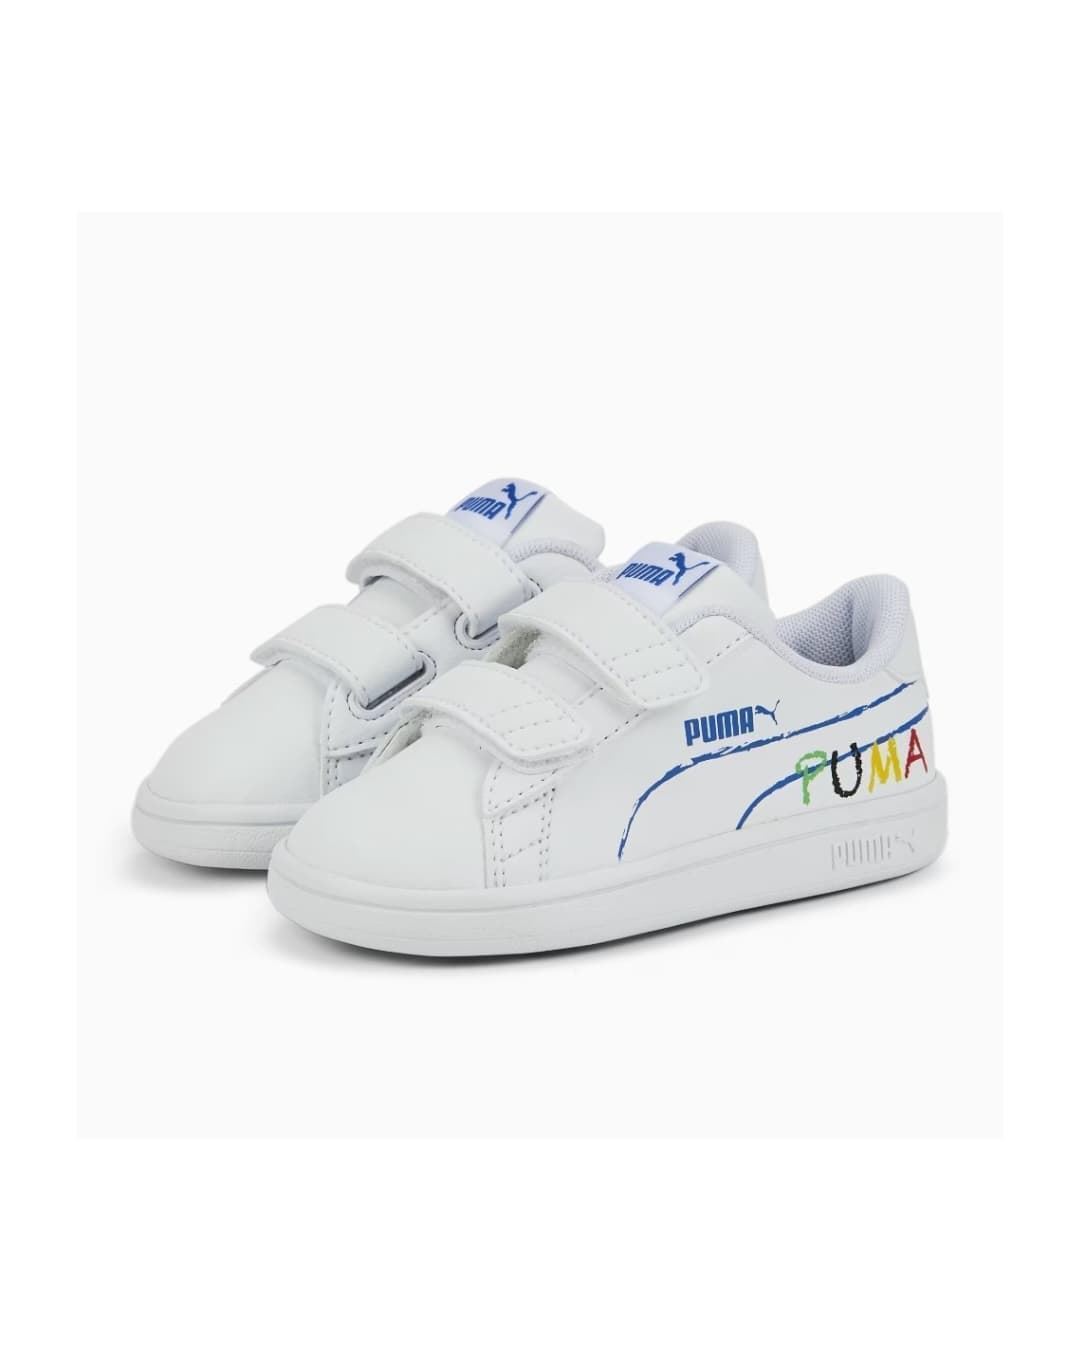 Puma Smash School White Sneakers for Kids - Image 2